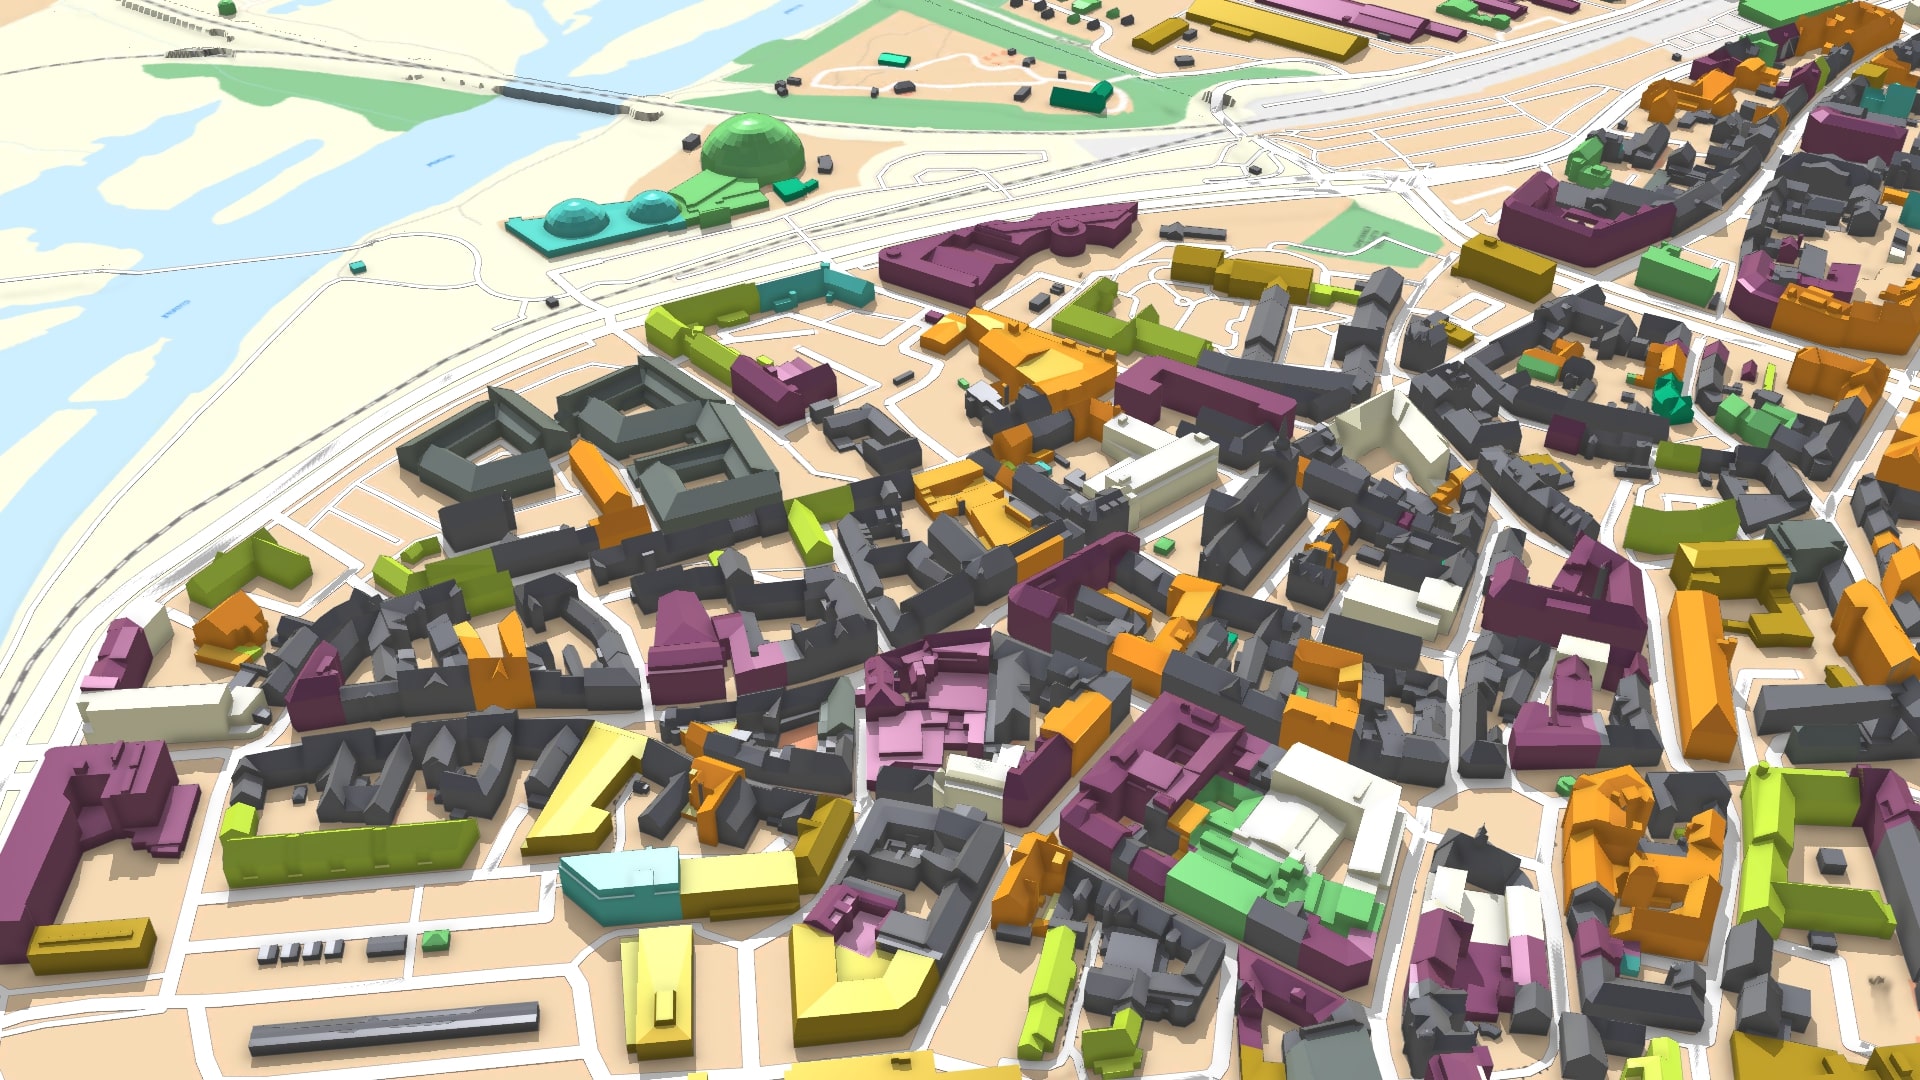 Globe Life Park 3D model - Architecture on 3DModels